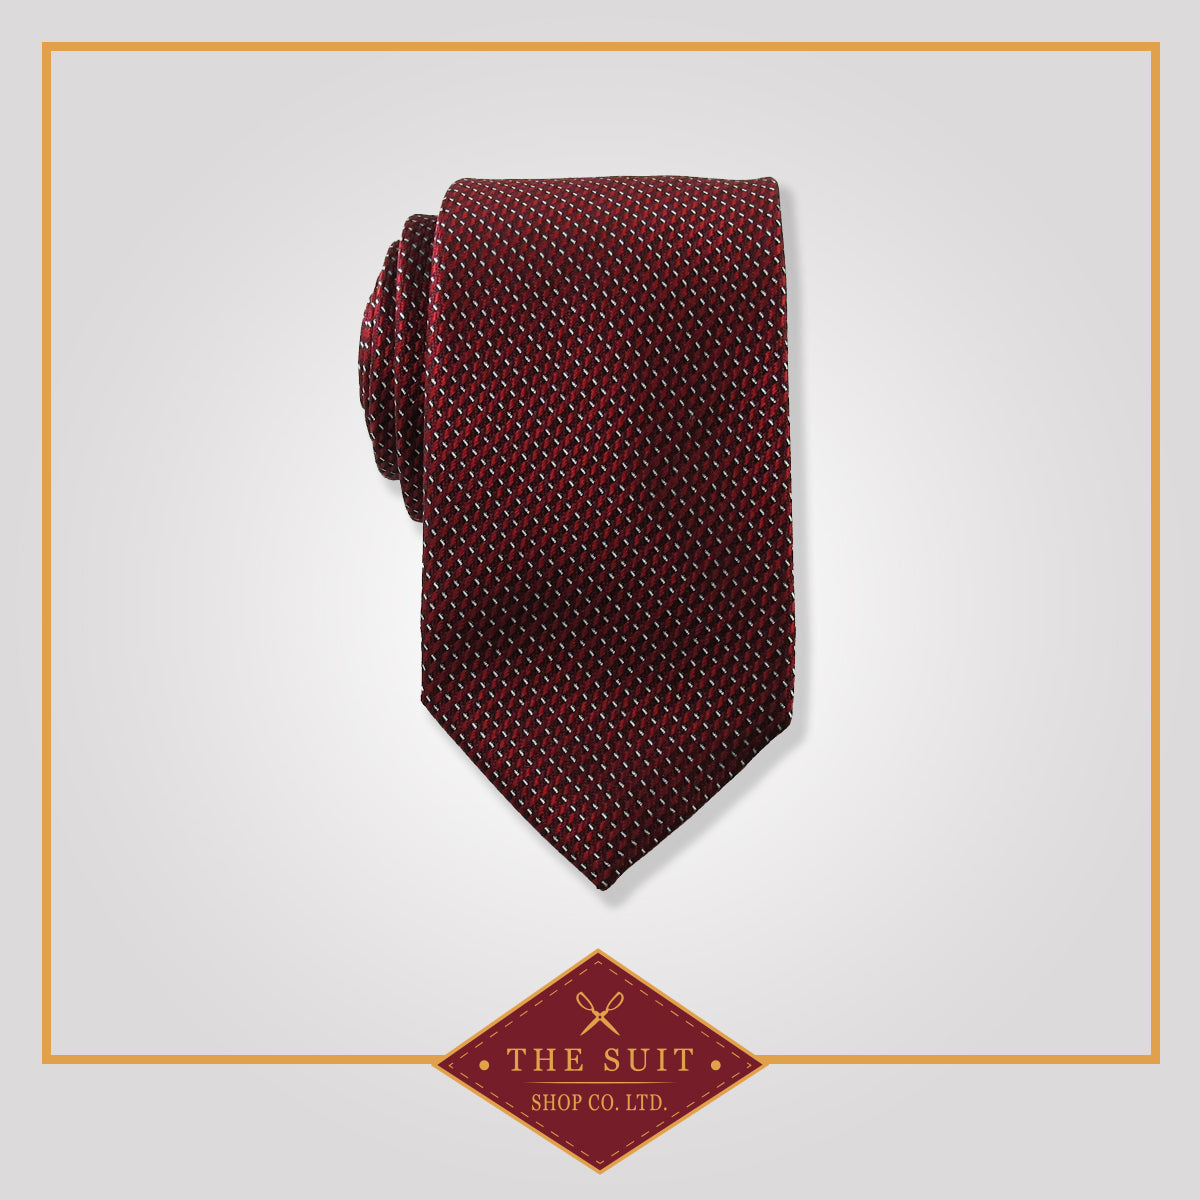 Buccaneer Patterned Tie